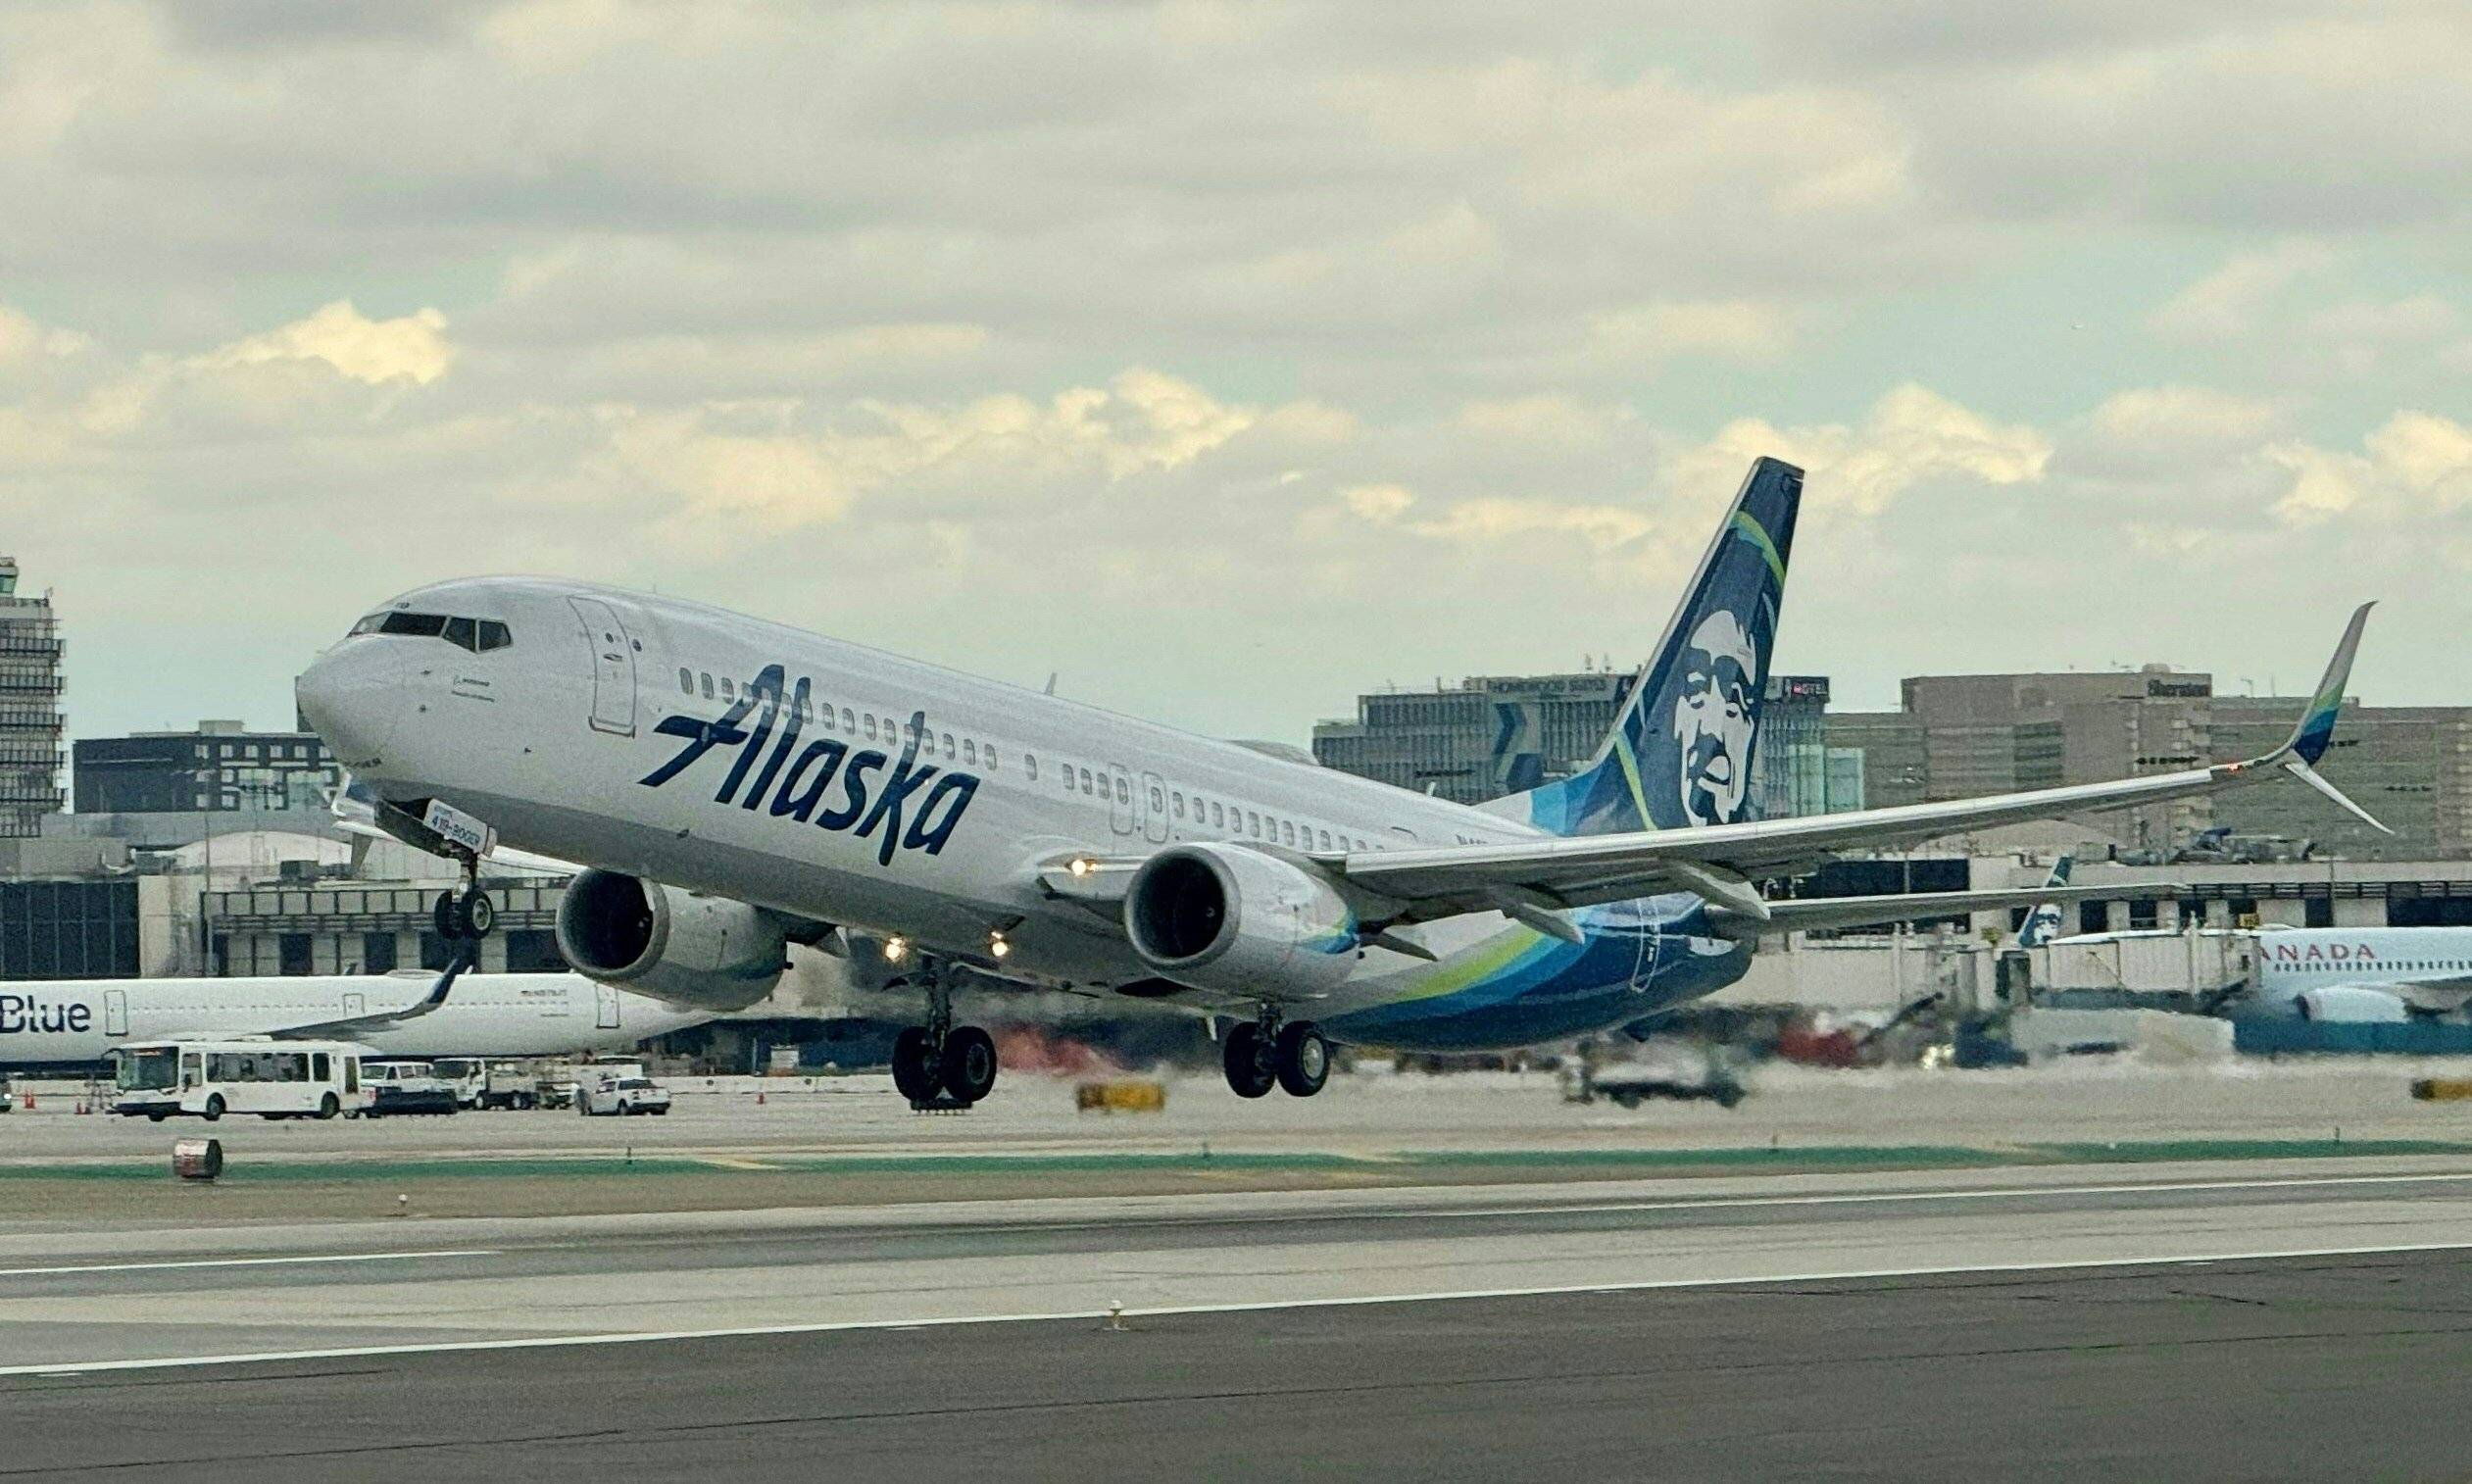 Samolot Boeinga należący do Alaska Airlines stoi na płycie lotniska